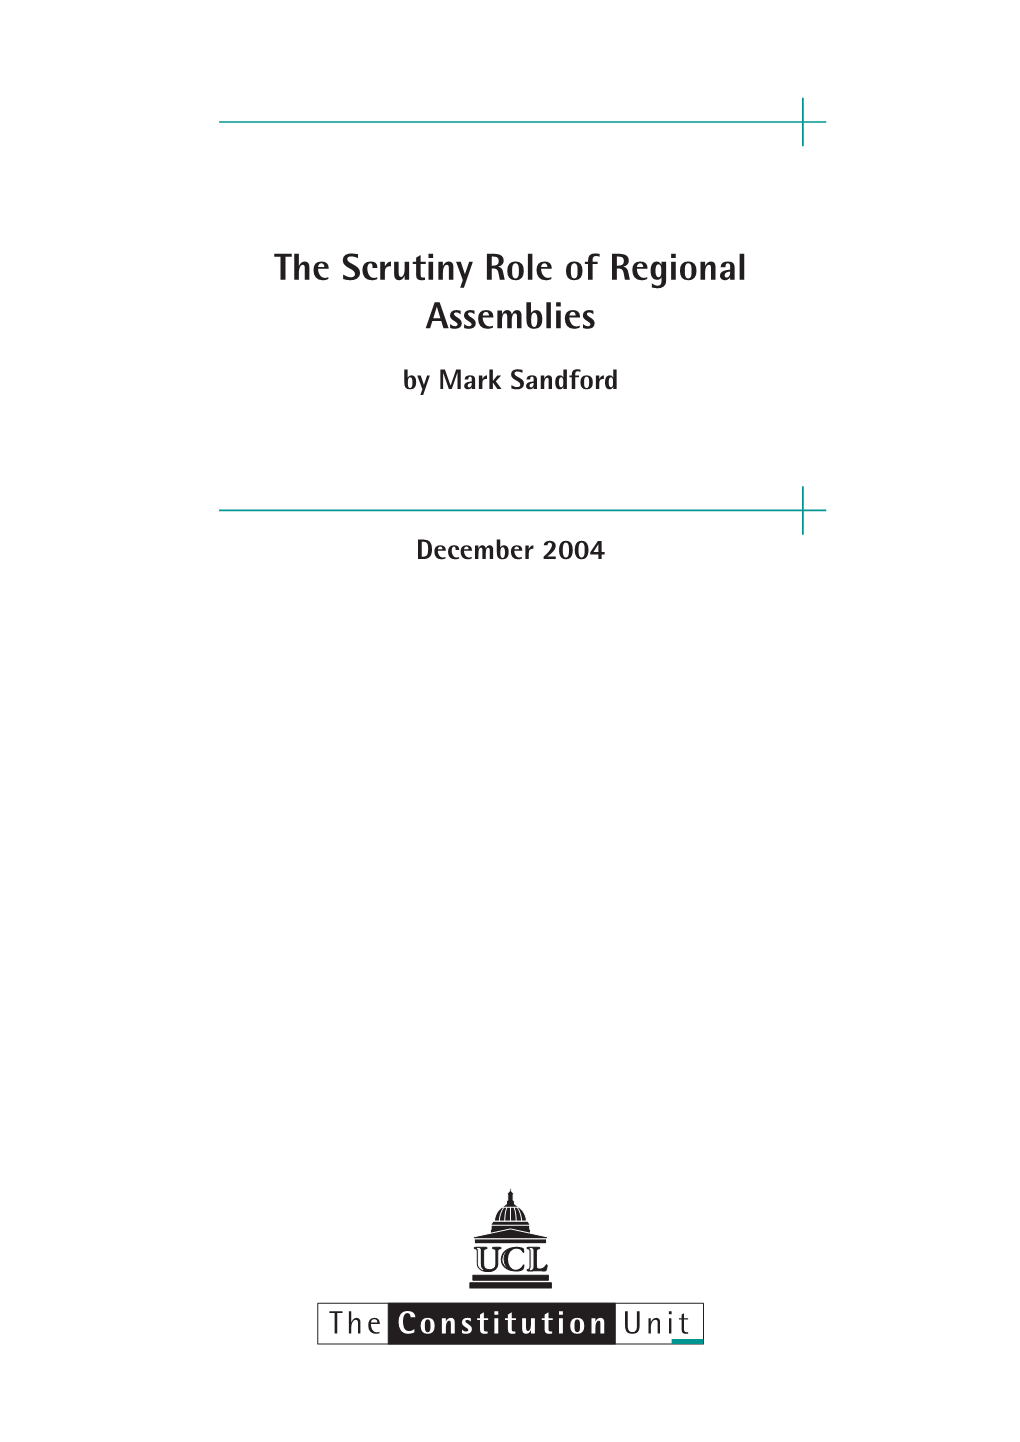 The Scrutiny Role of Regional Assemblies